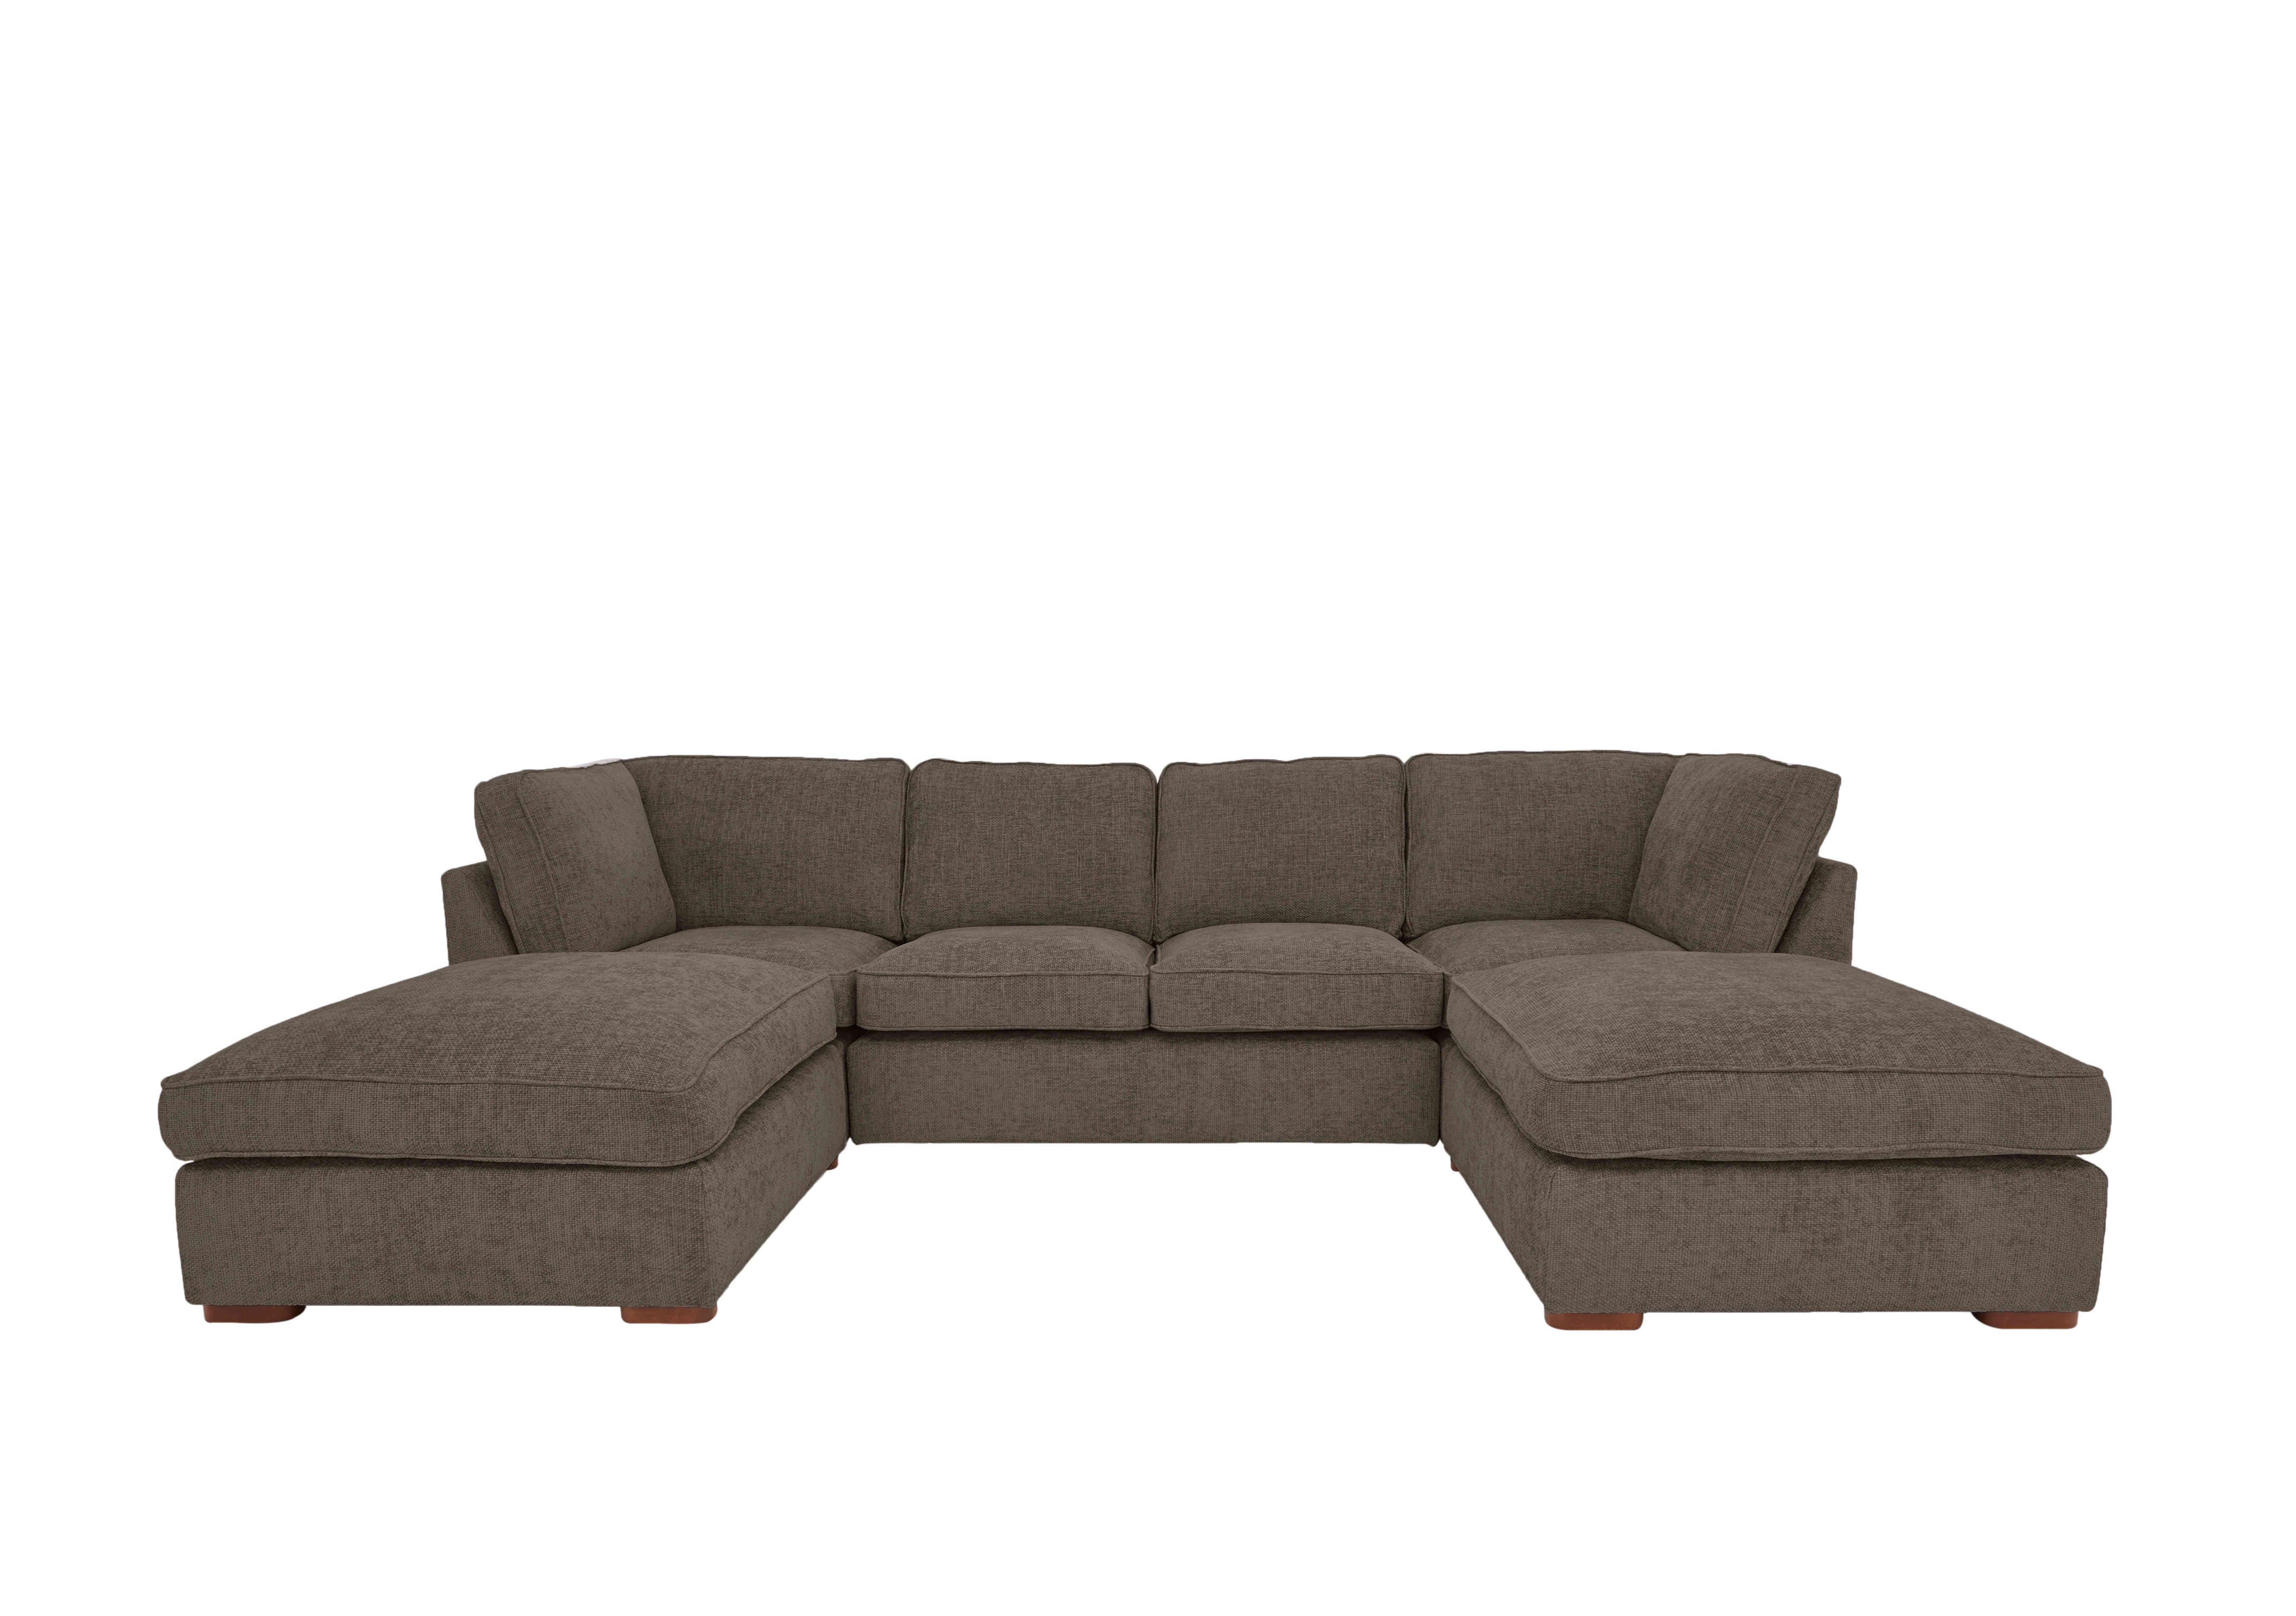 Emilia Large U-Shaped Corner Sofa in Coco on Furniture Village